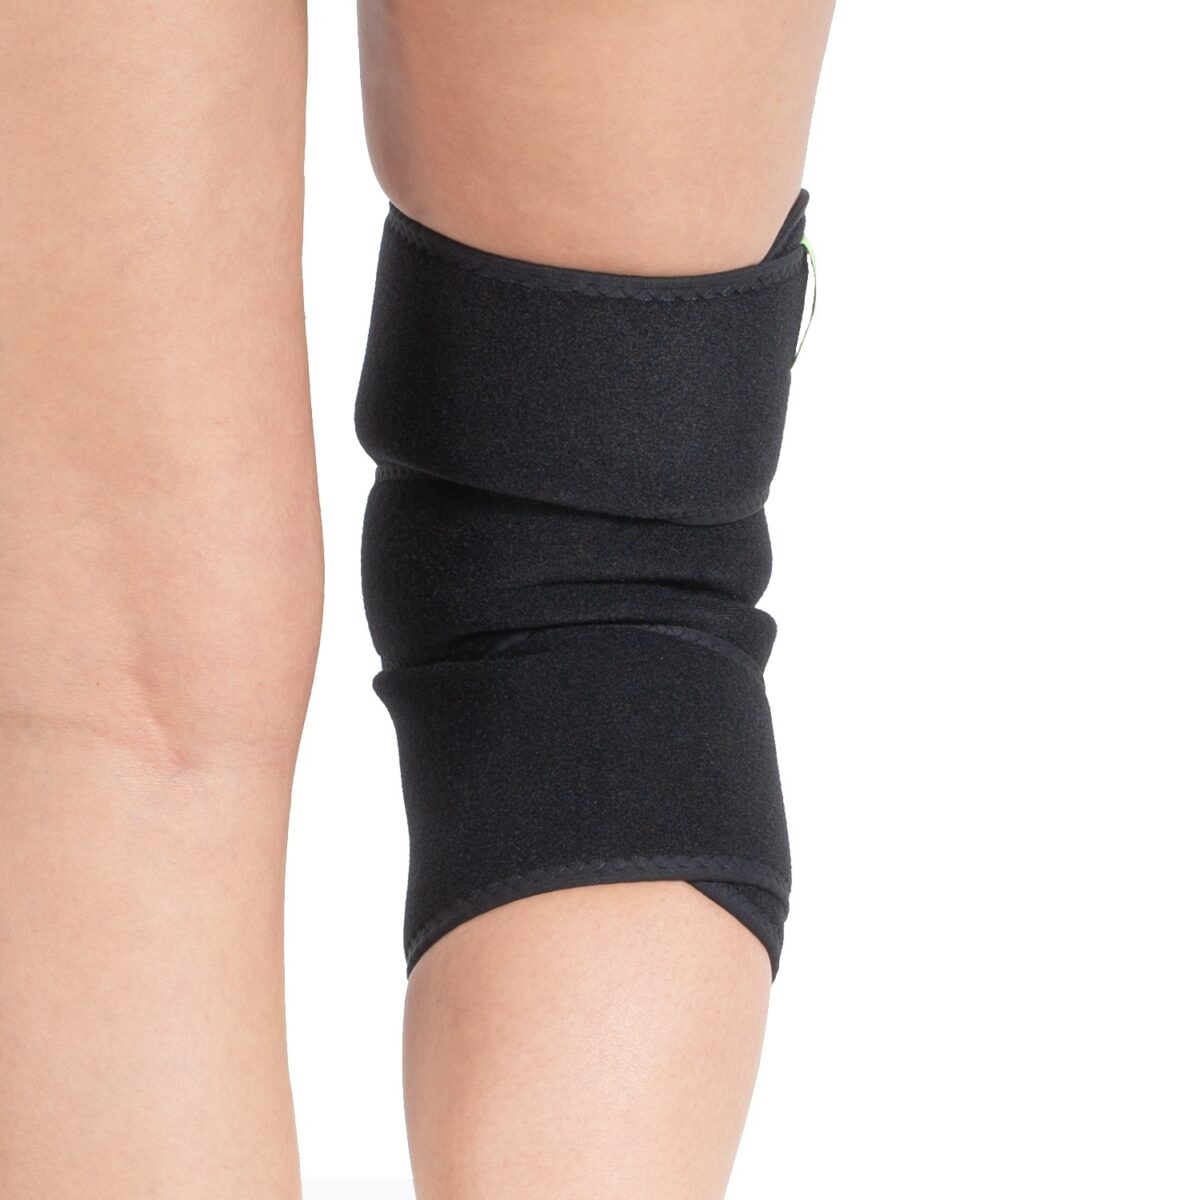 wingmed orthopedic equipments W502 simple knee support 99